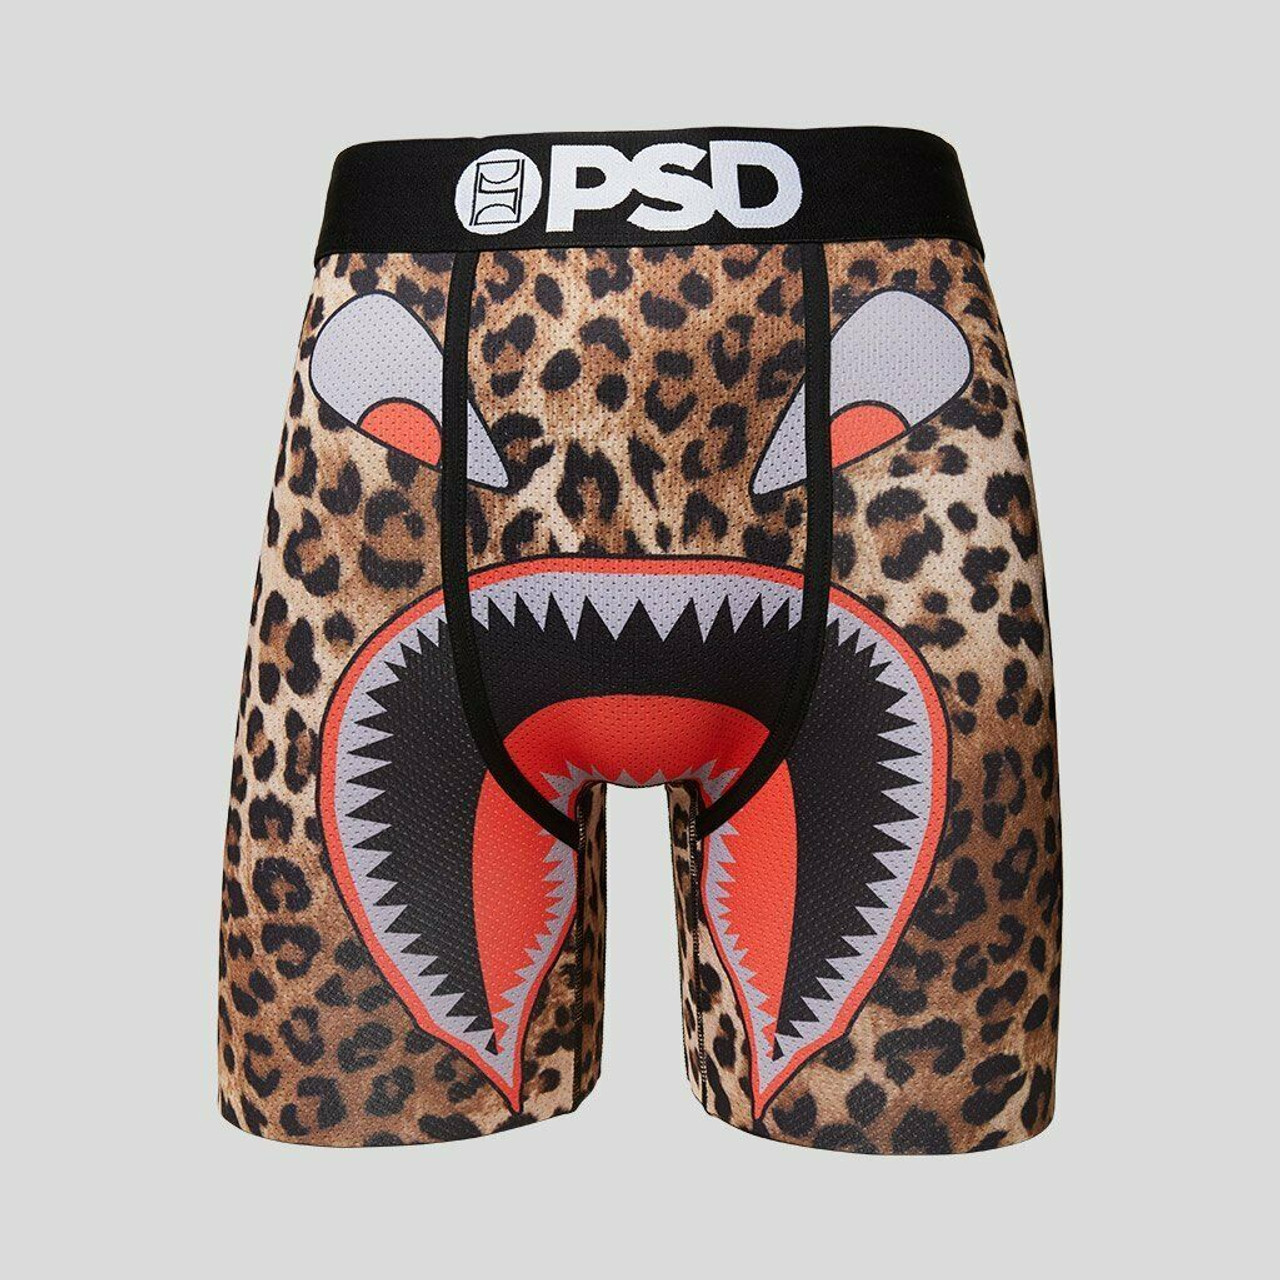 PSD Cheetah Print Warface Animal Urban Athletic Boxers Briefs Underwear  42011047 - Fearless Apparel